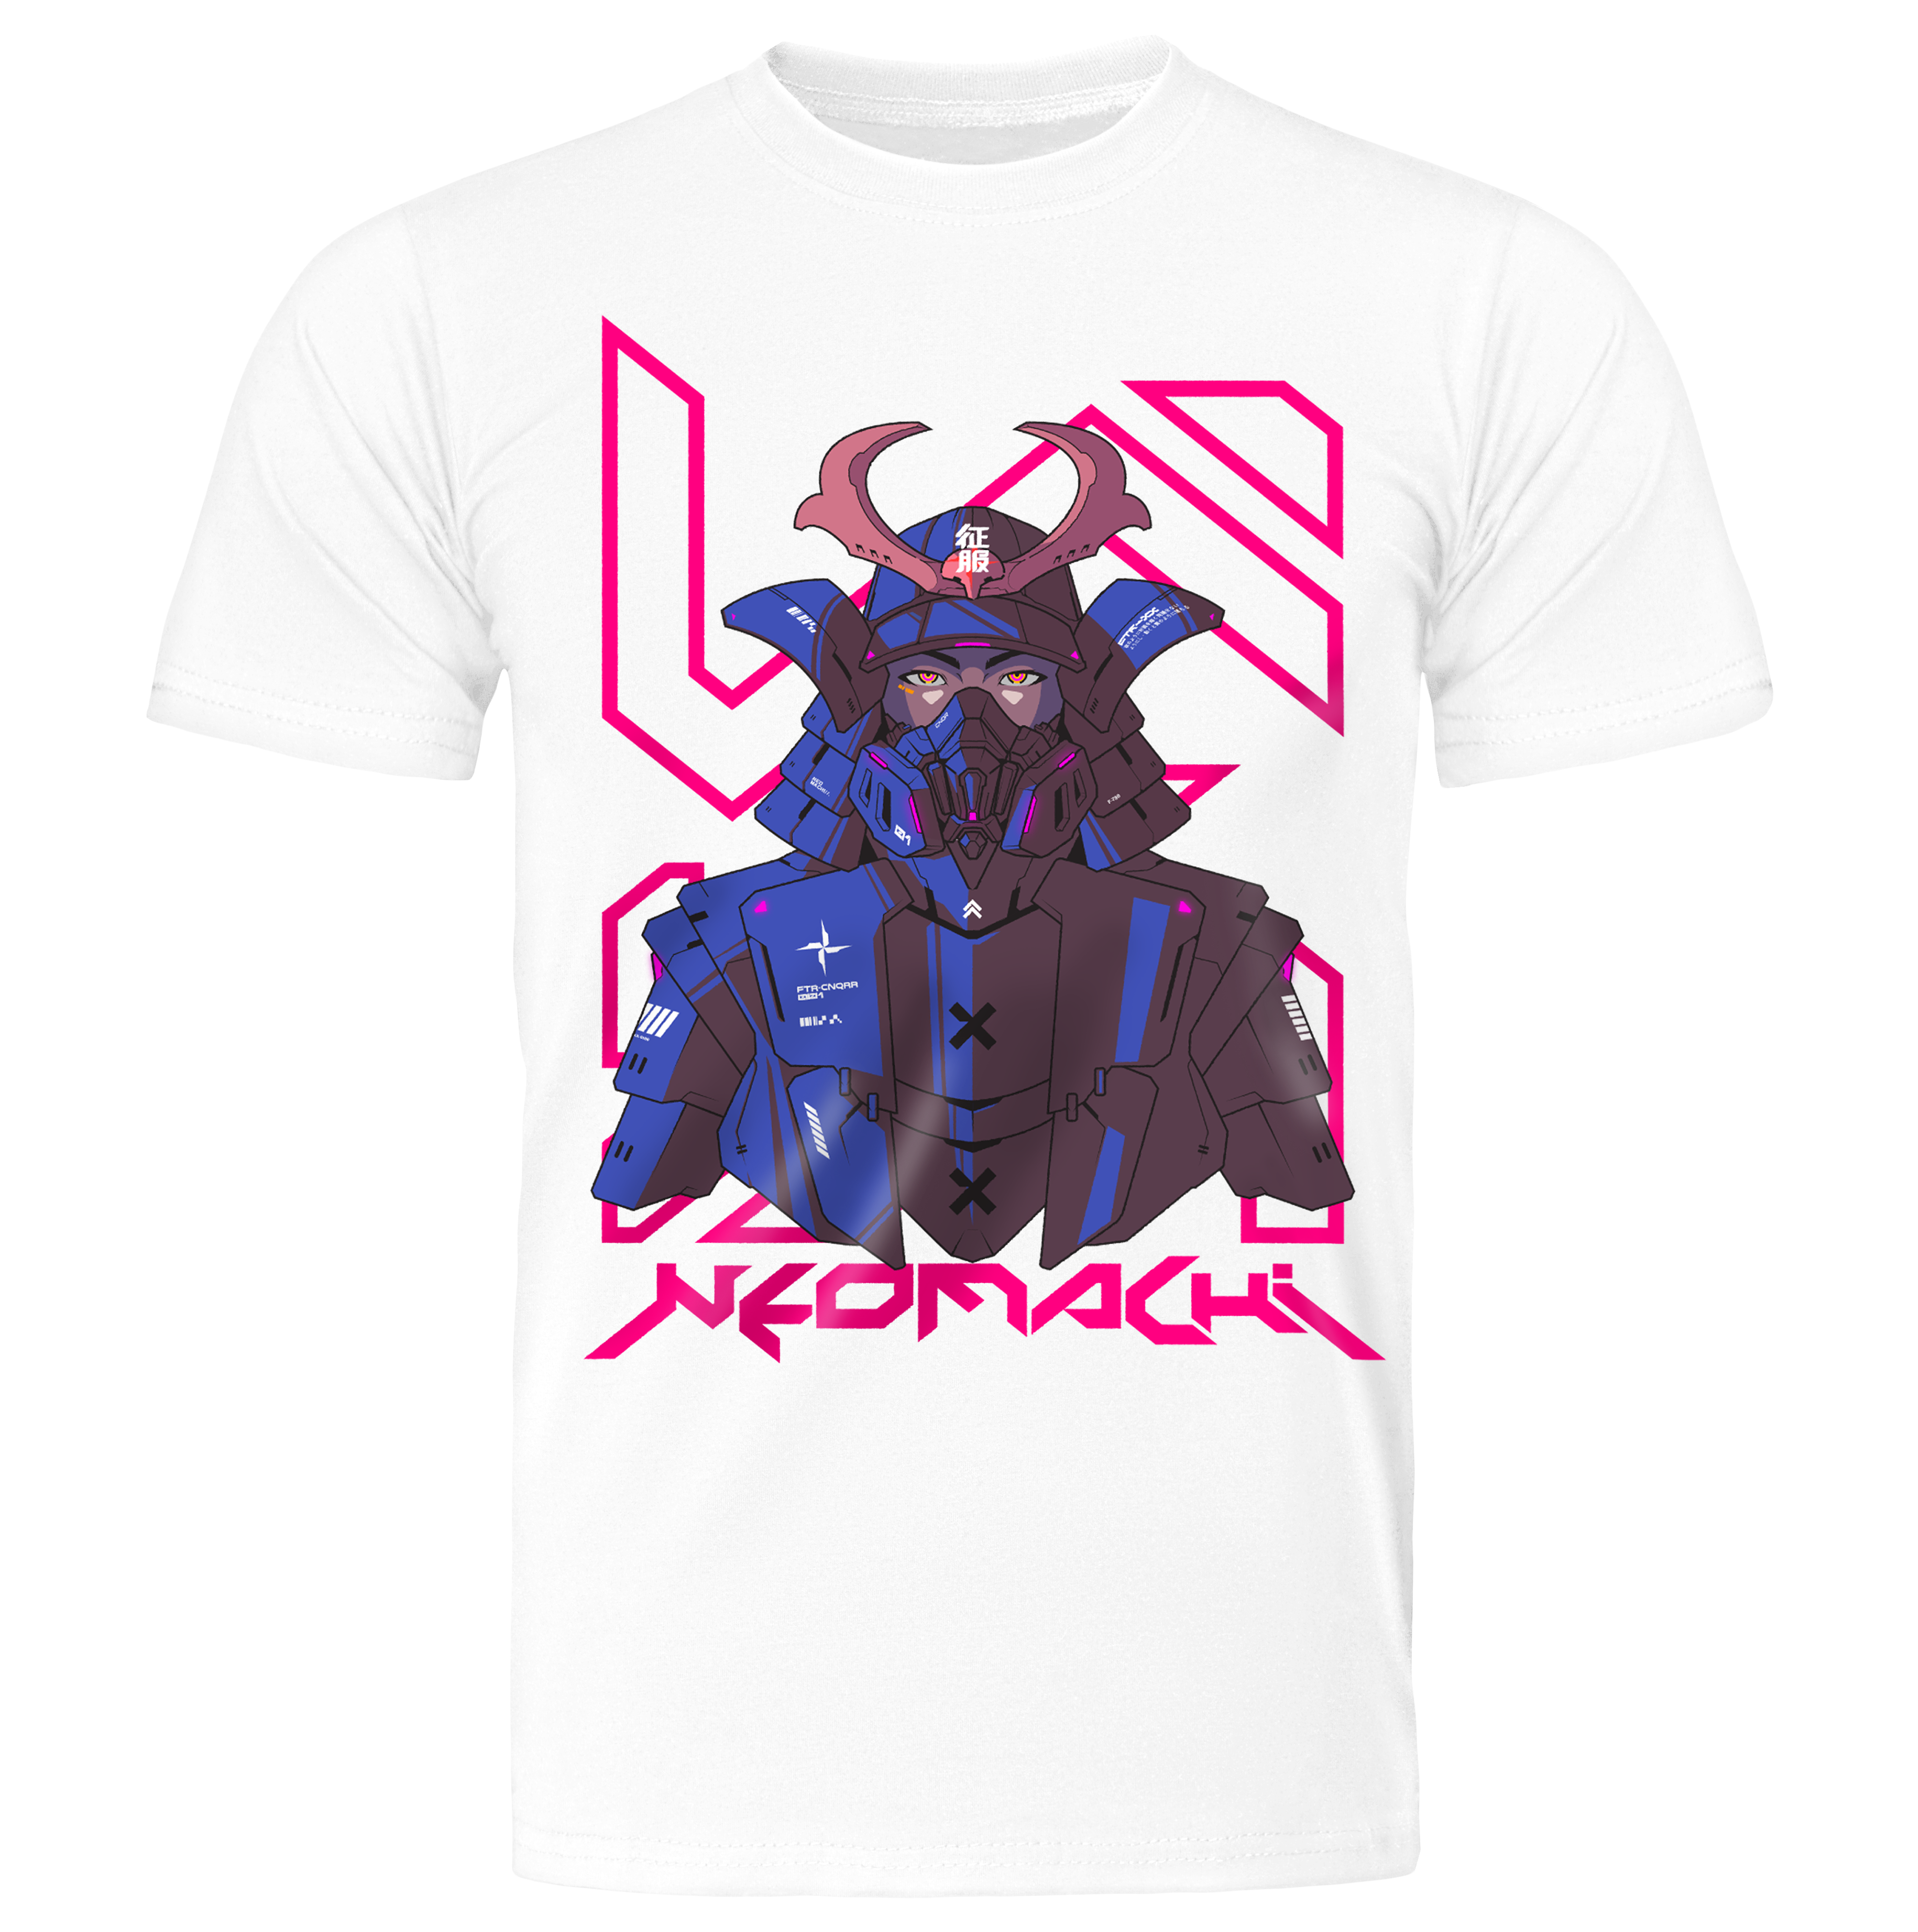 5amur41 T-shirt - White - Front - cyberpunk T-shirt - Neomachi